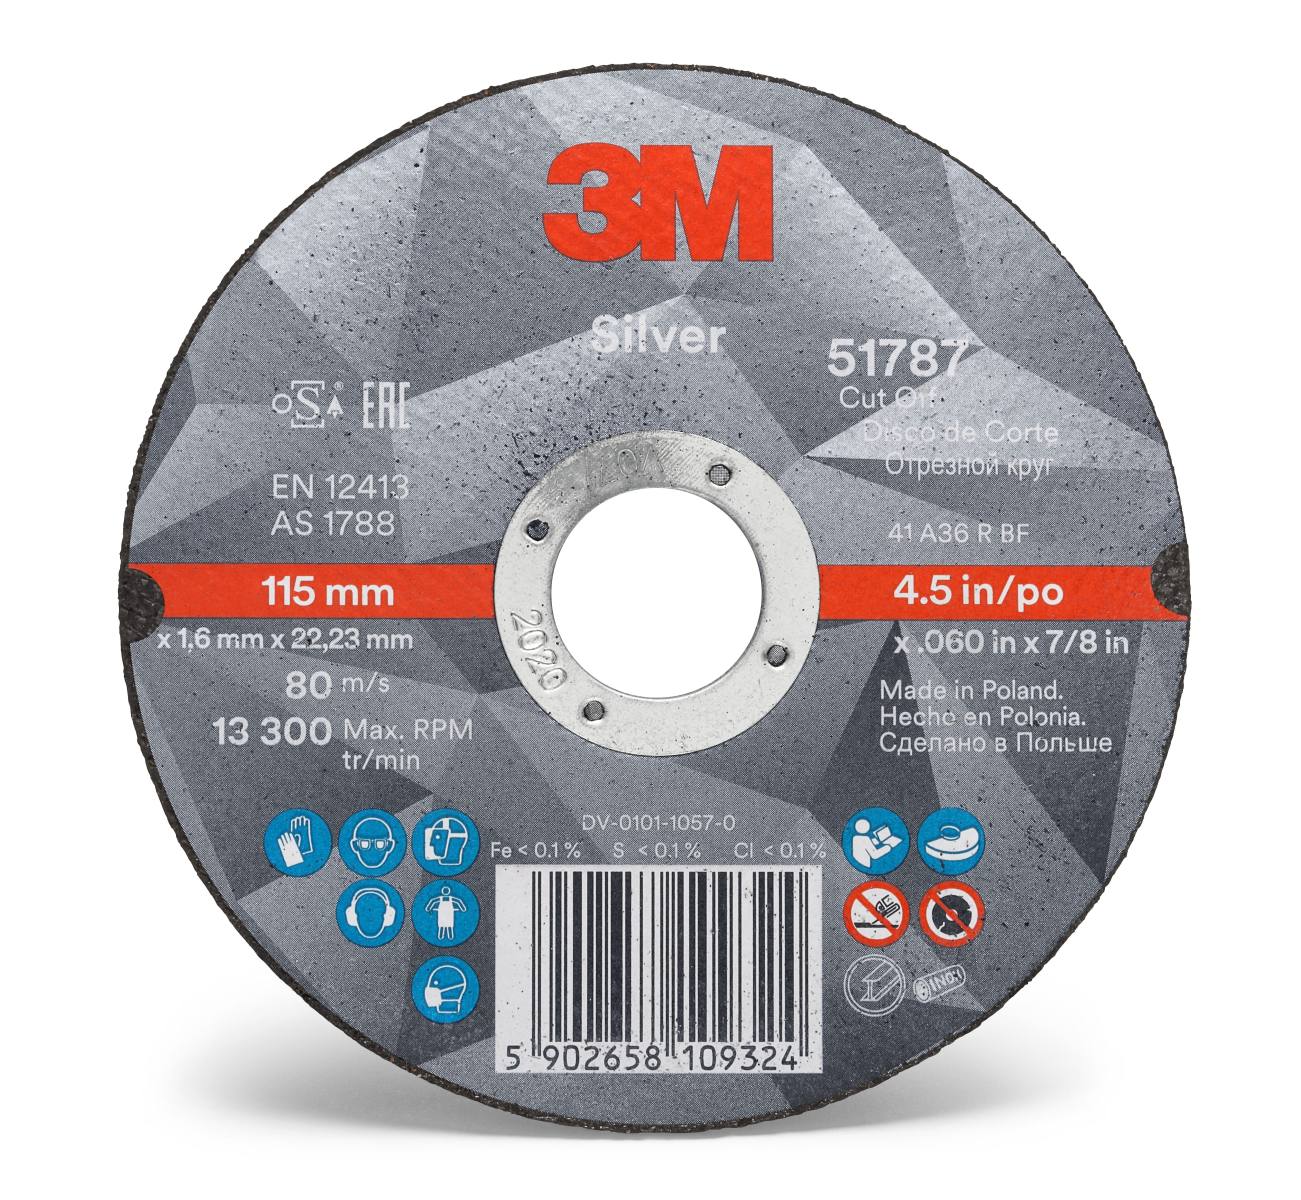 Disco da taglio 3M Silver Cut-Off, 105 mm, 1,0 mm, 10 mm, T41, 51777